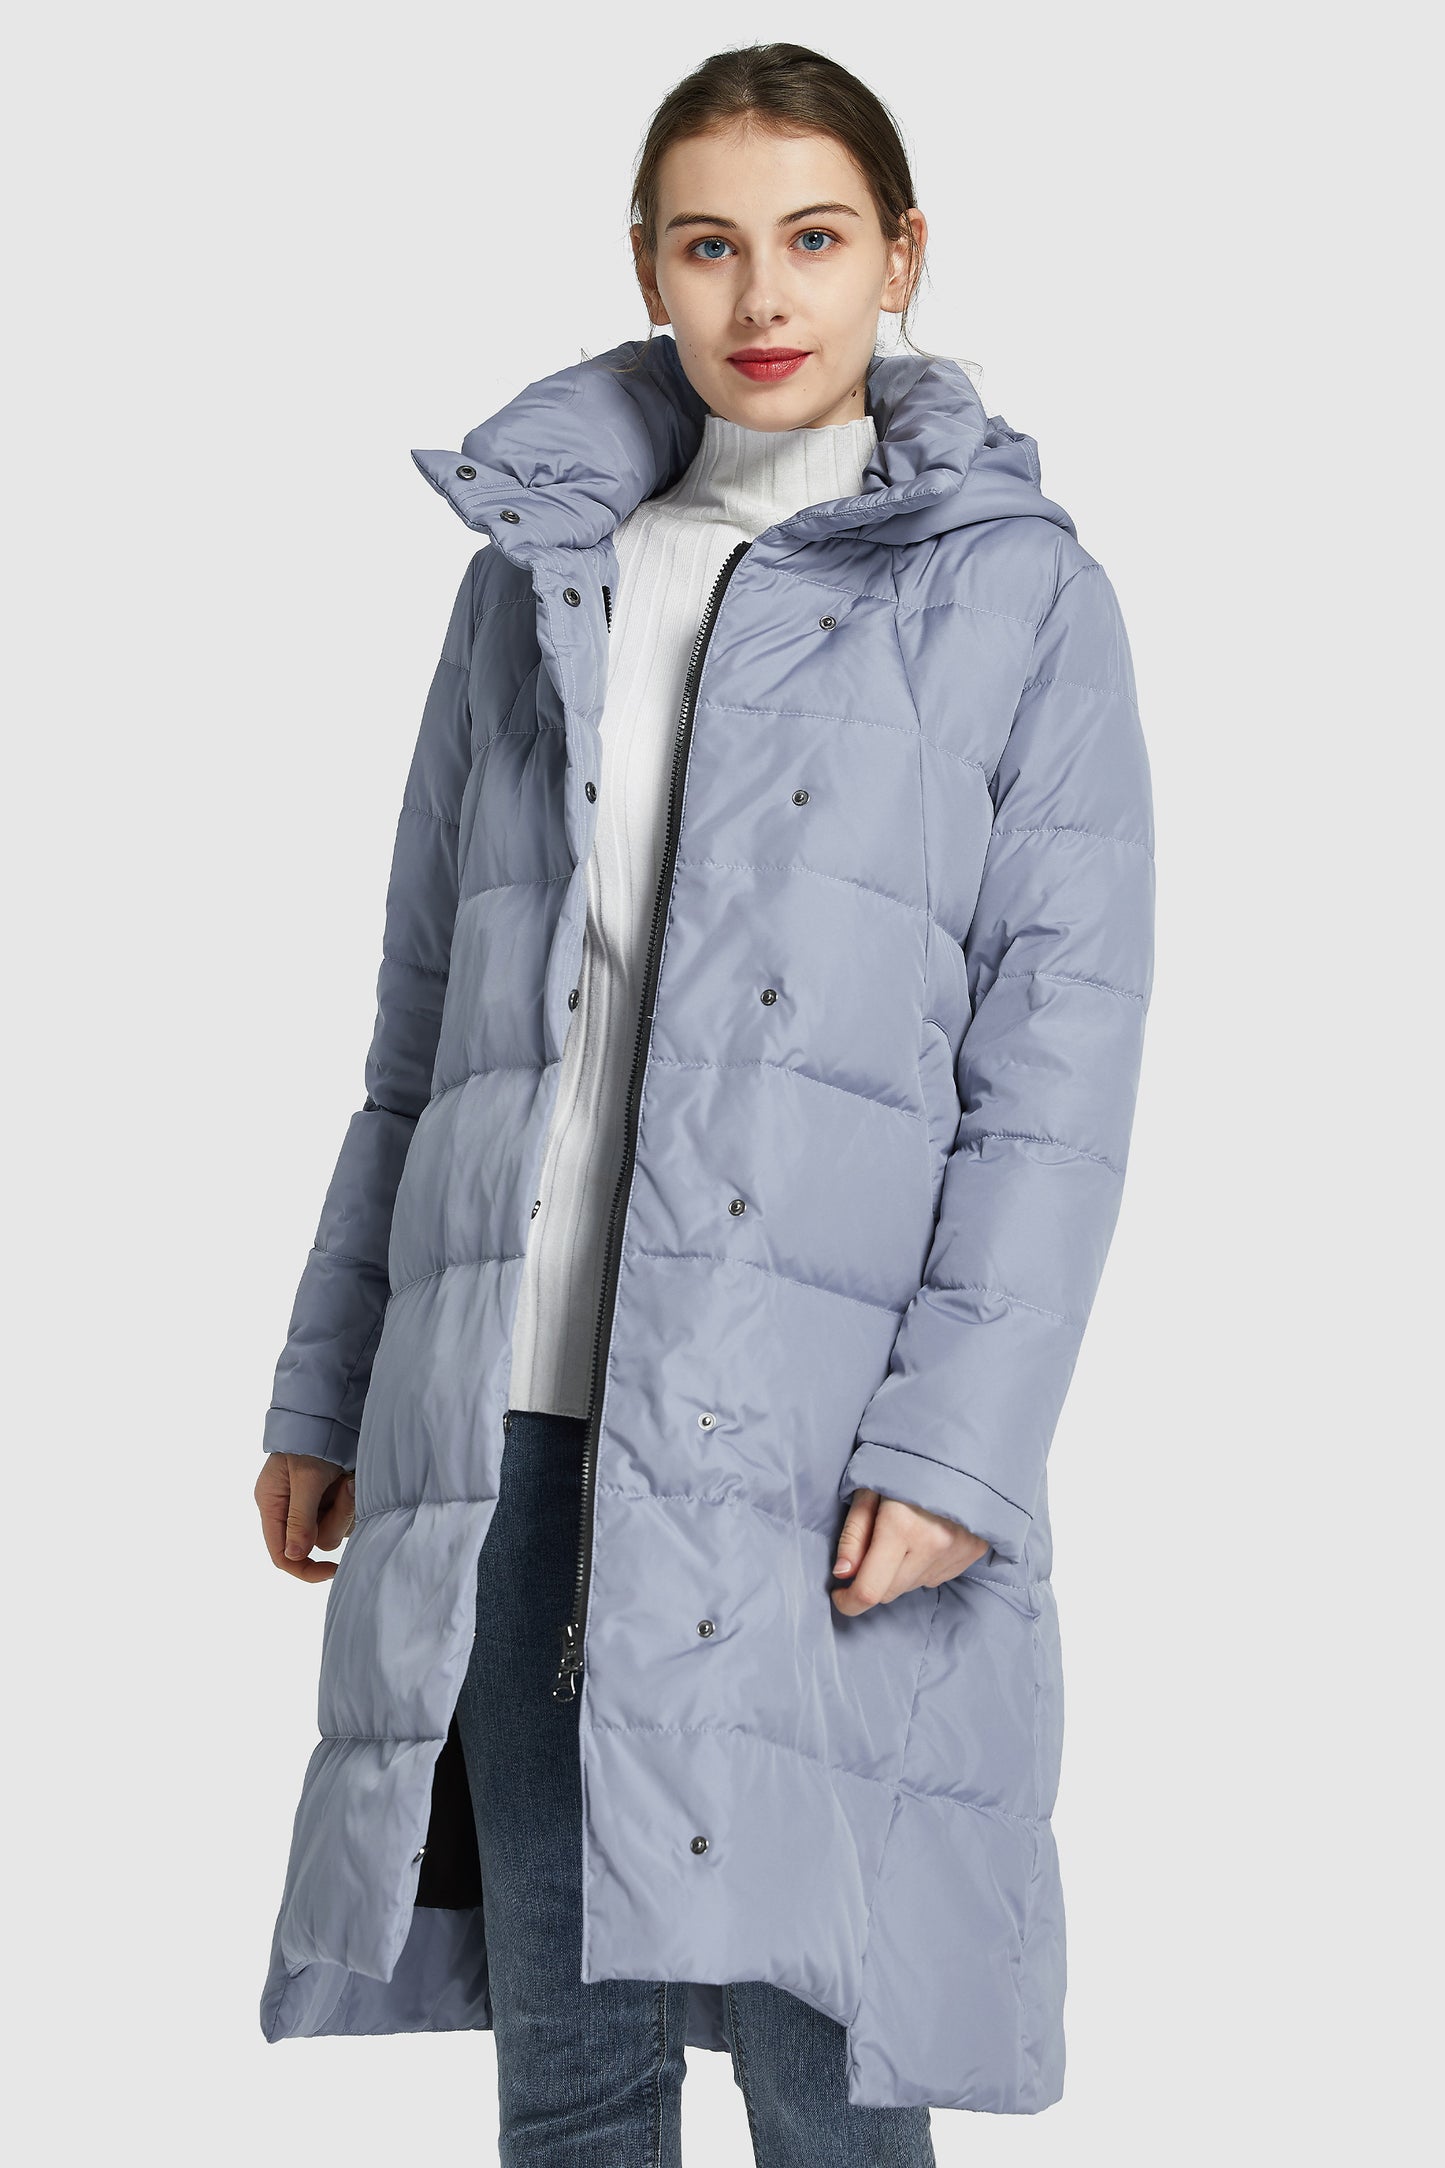 Hooded Winter Two-Way Zipper Down Coat